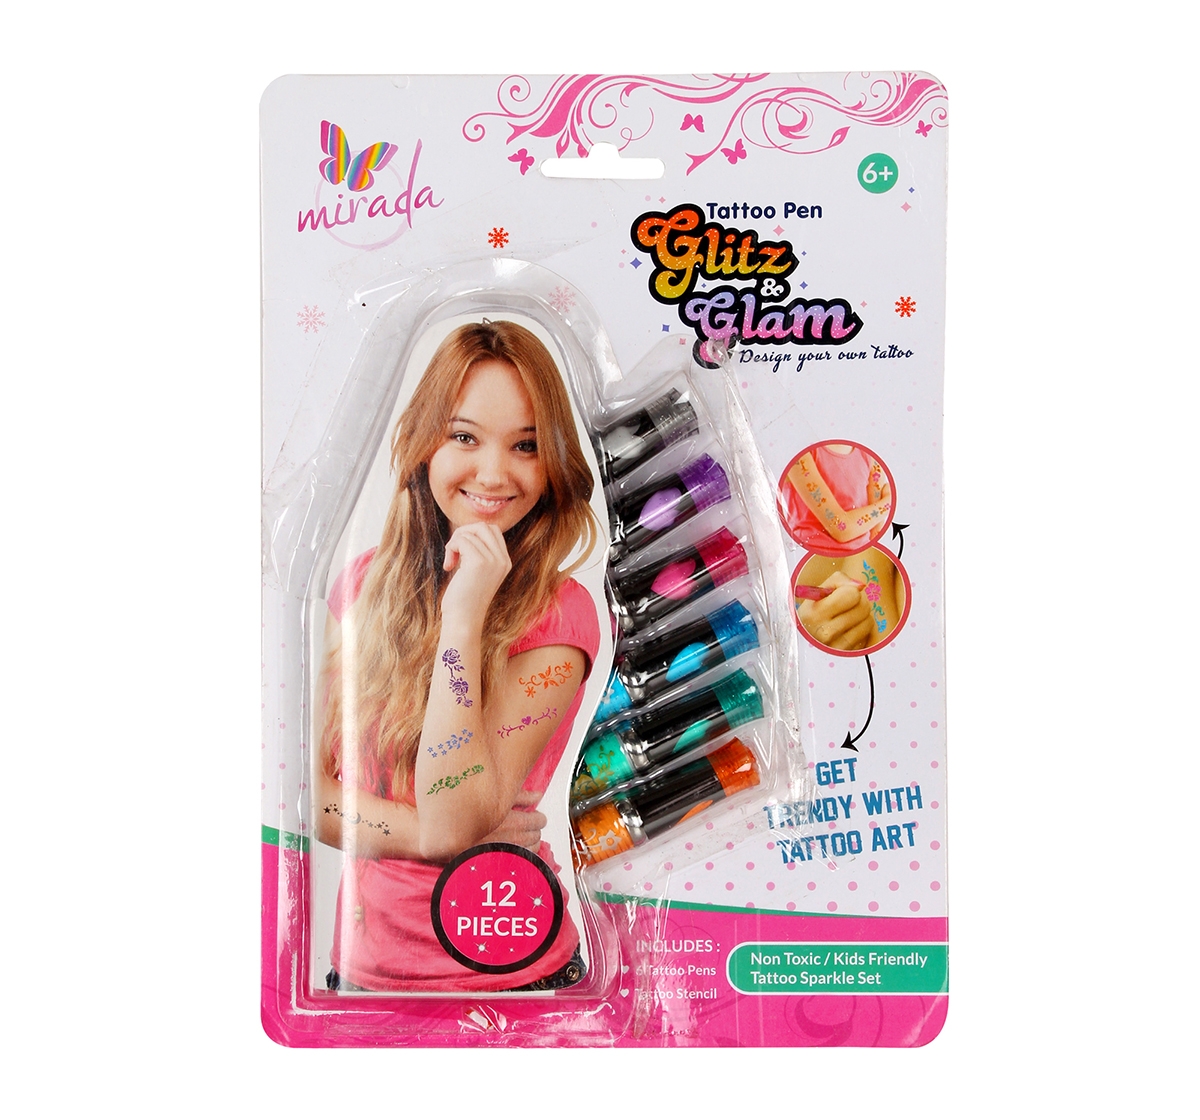 Mirada | Mirada Sparkle and Shine Tattoo Pen DIY Art & Craft Kits for Girls age 6Y+